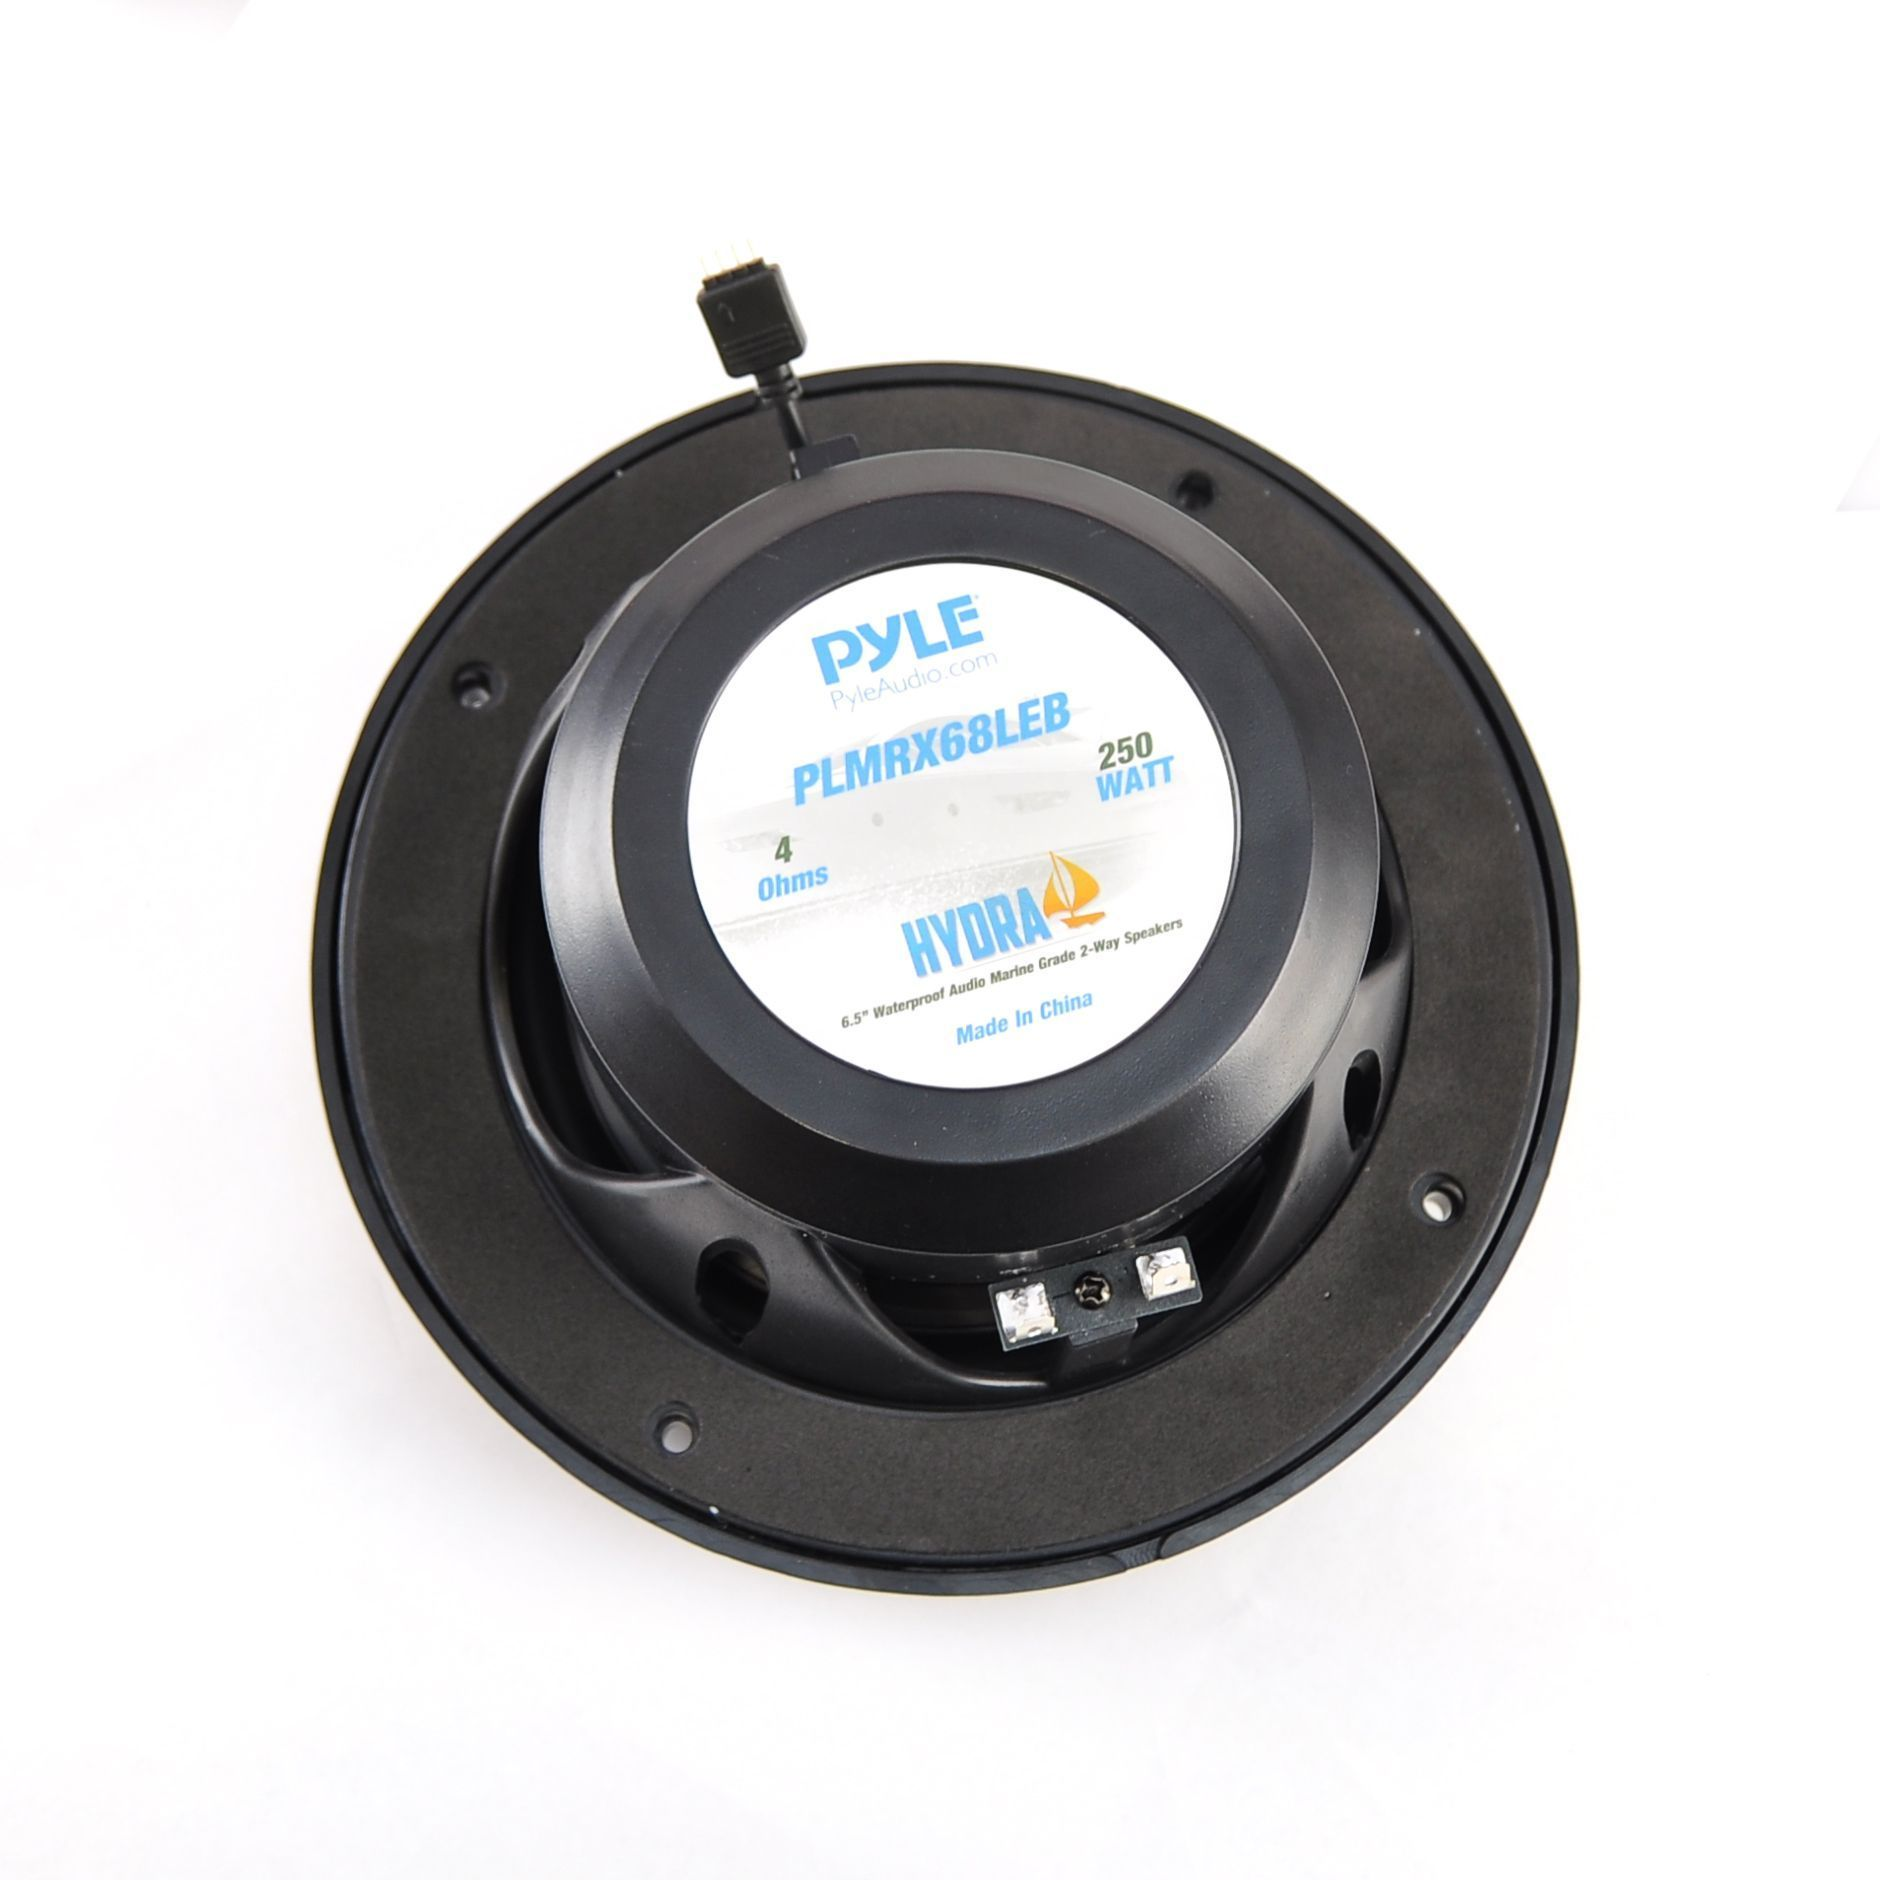 Pyle Pair of 6.5" Boat Speakers - Black (PLMRX68LEB)